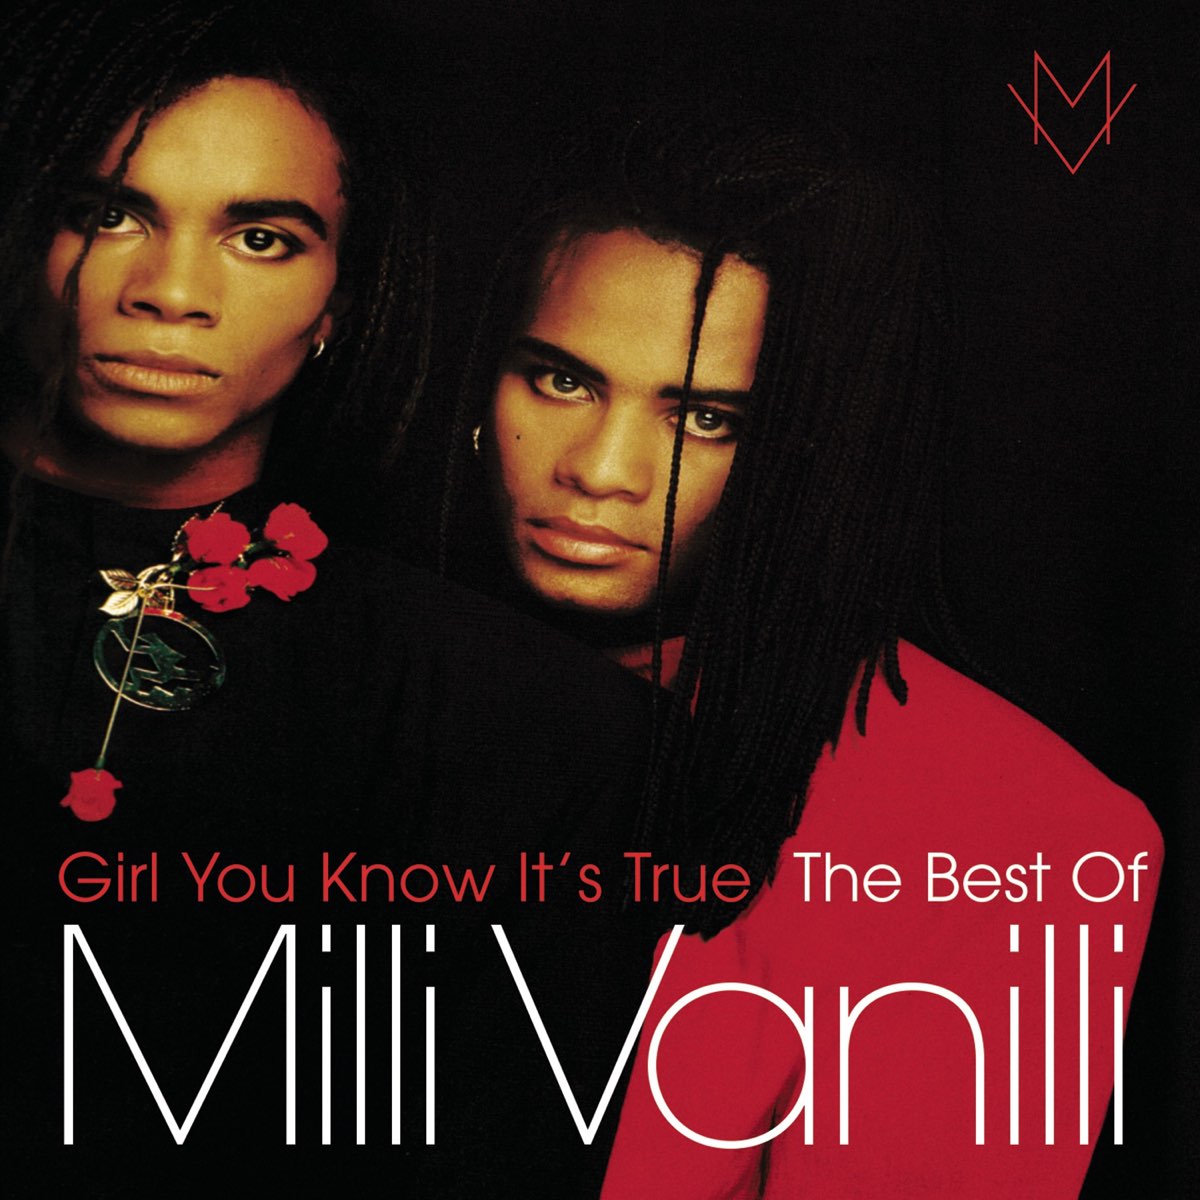 ‎Girl You Know It's True The Best of Milli Vanilli by Milli Vanilli